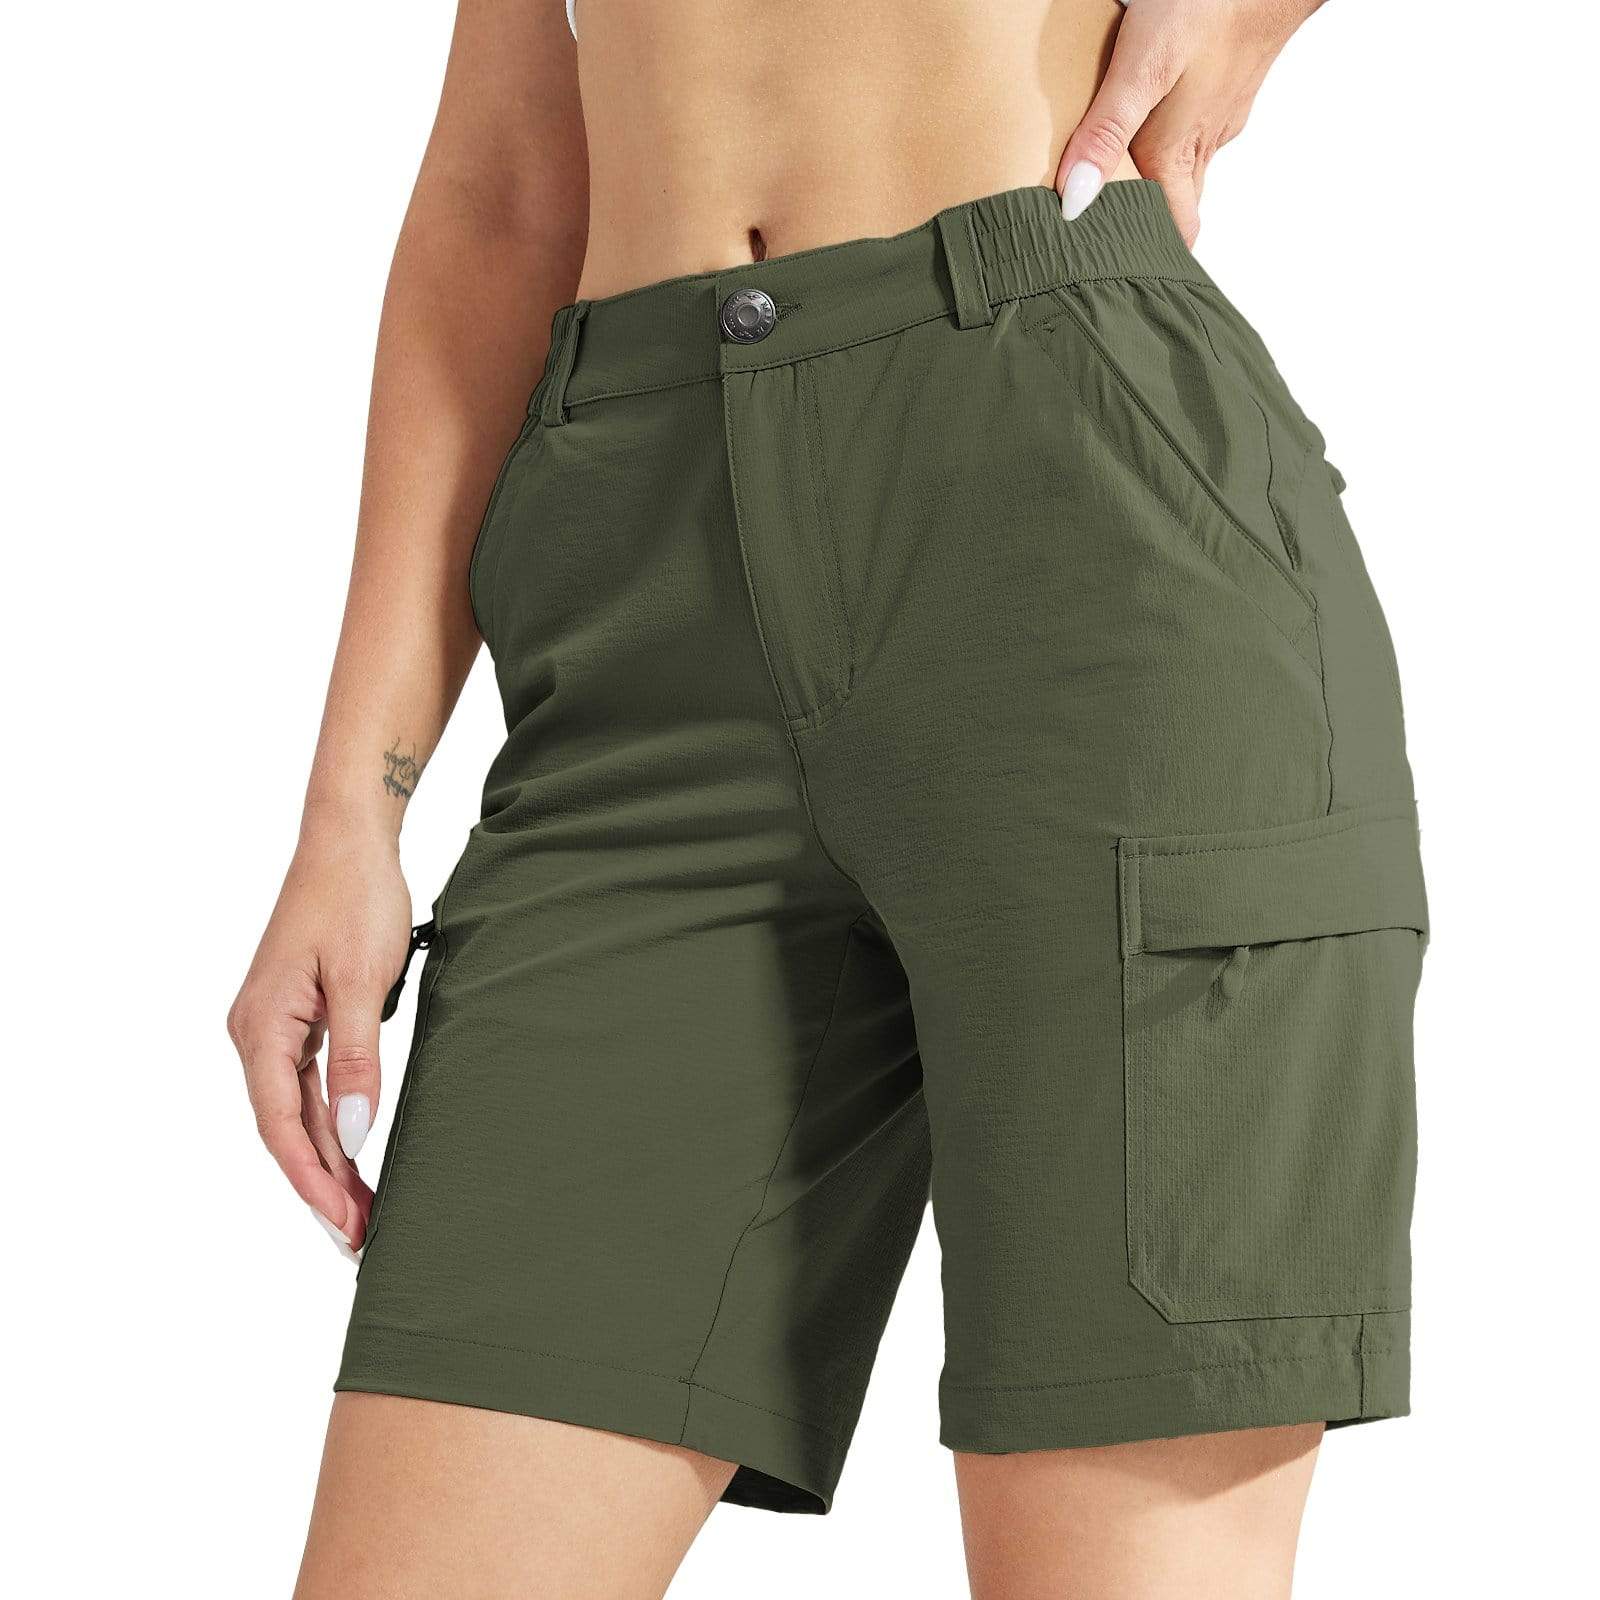 Mier Women's Stretchy Hiking Shorts Quick Dry Cargo Shorts, Khaki / 8